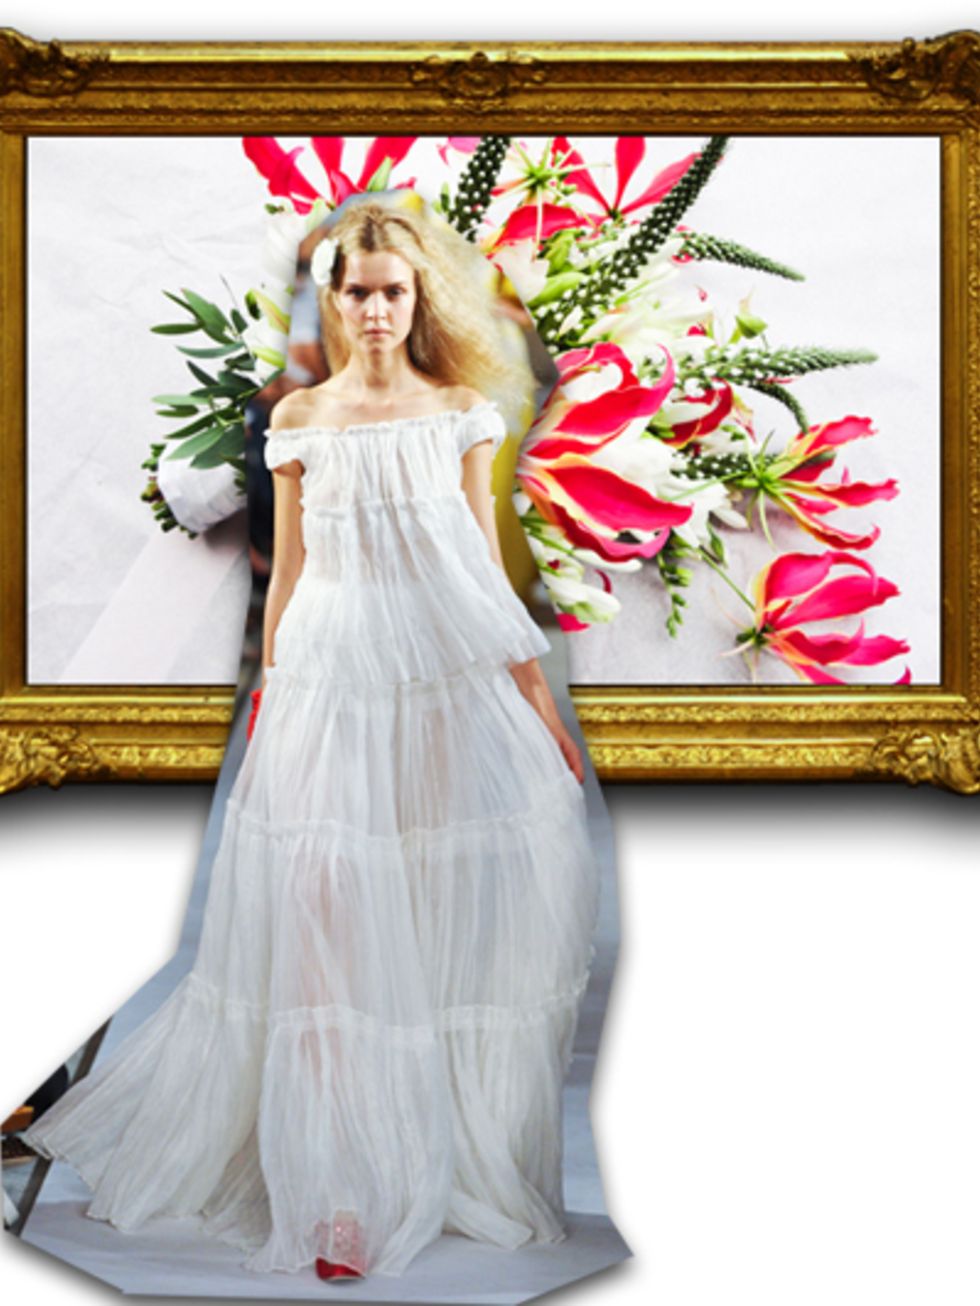 Petal, Bridal clothing, Dress, Red, Gown, Wedding dress, Cut flowers, Bride, Picture frame, Flower Arranging, 